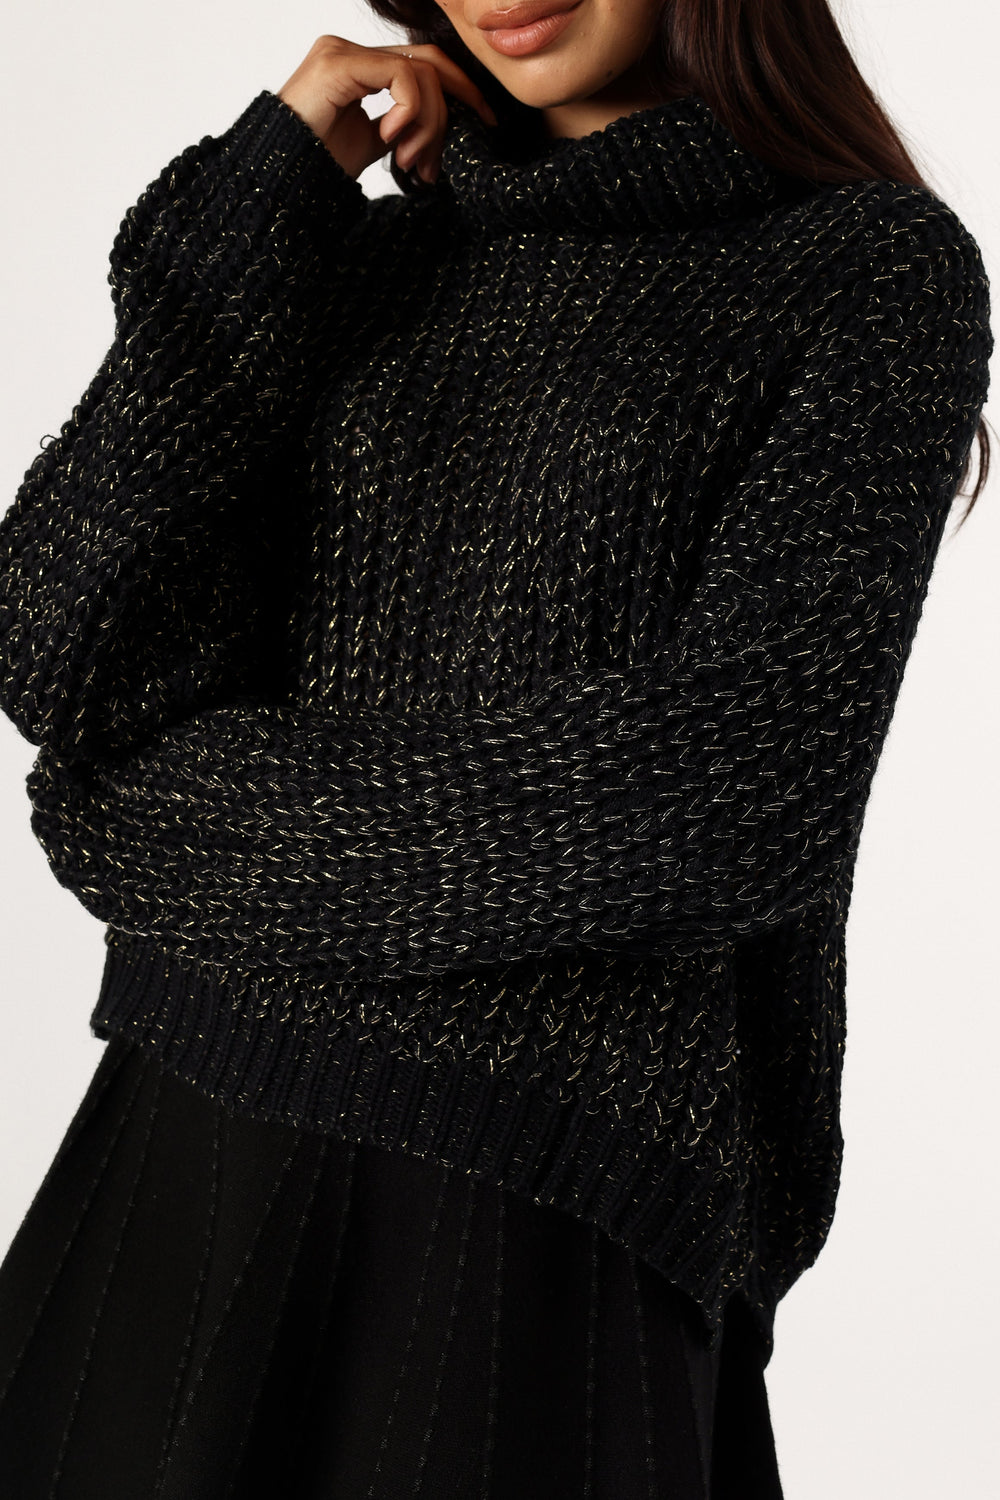 Petal and Pup USA KNITWEAR Eleanor Lurex Shine Knit Sweater - Black